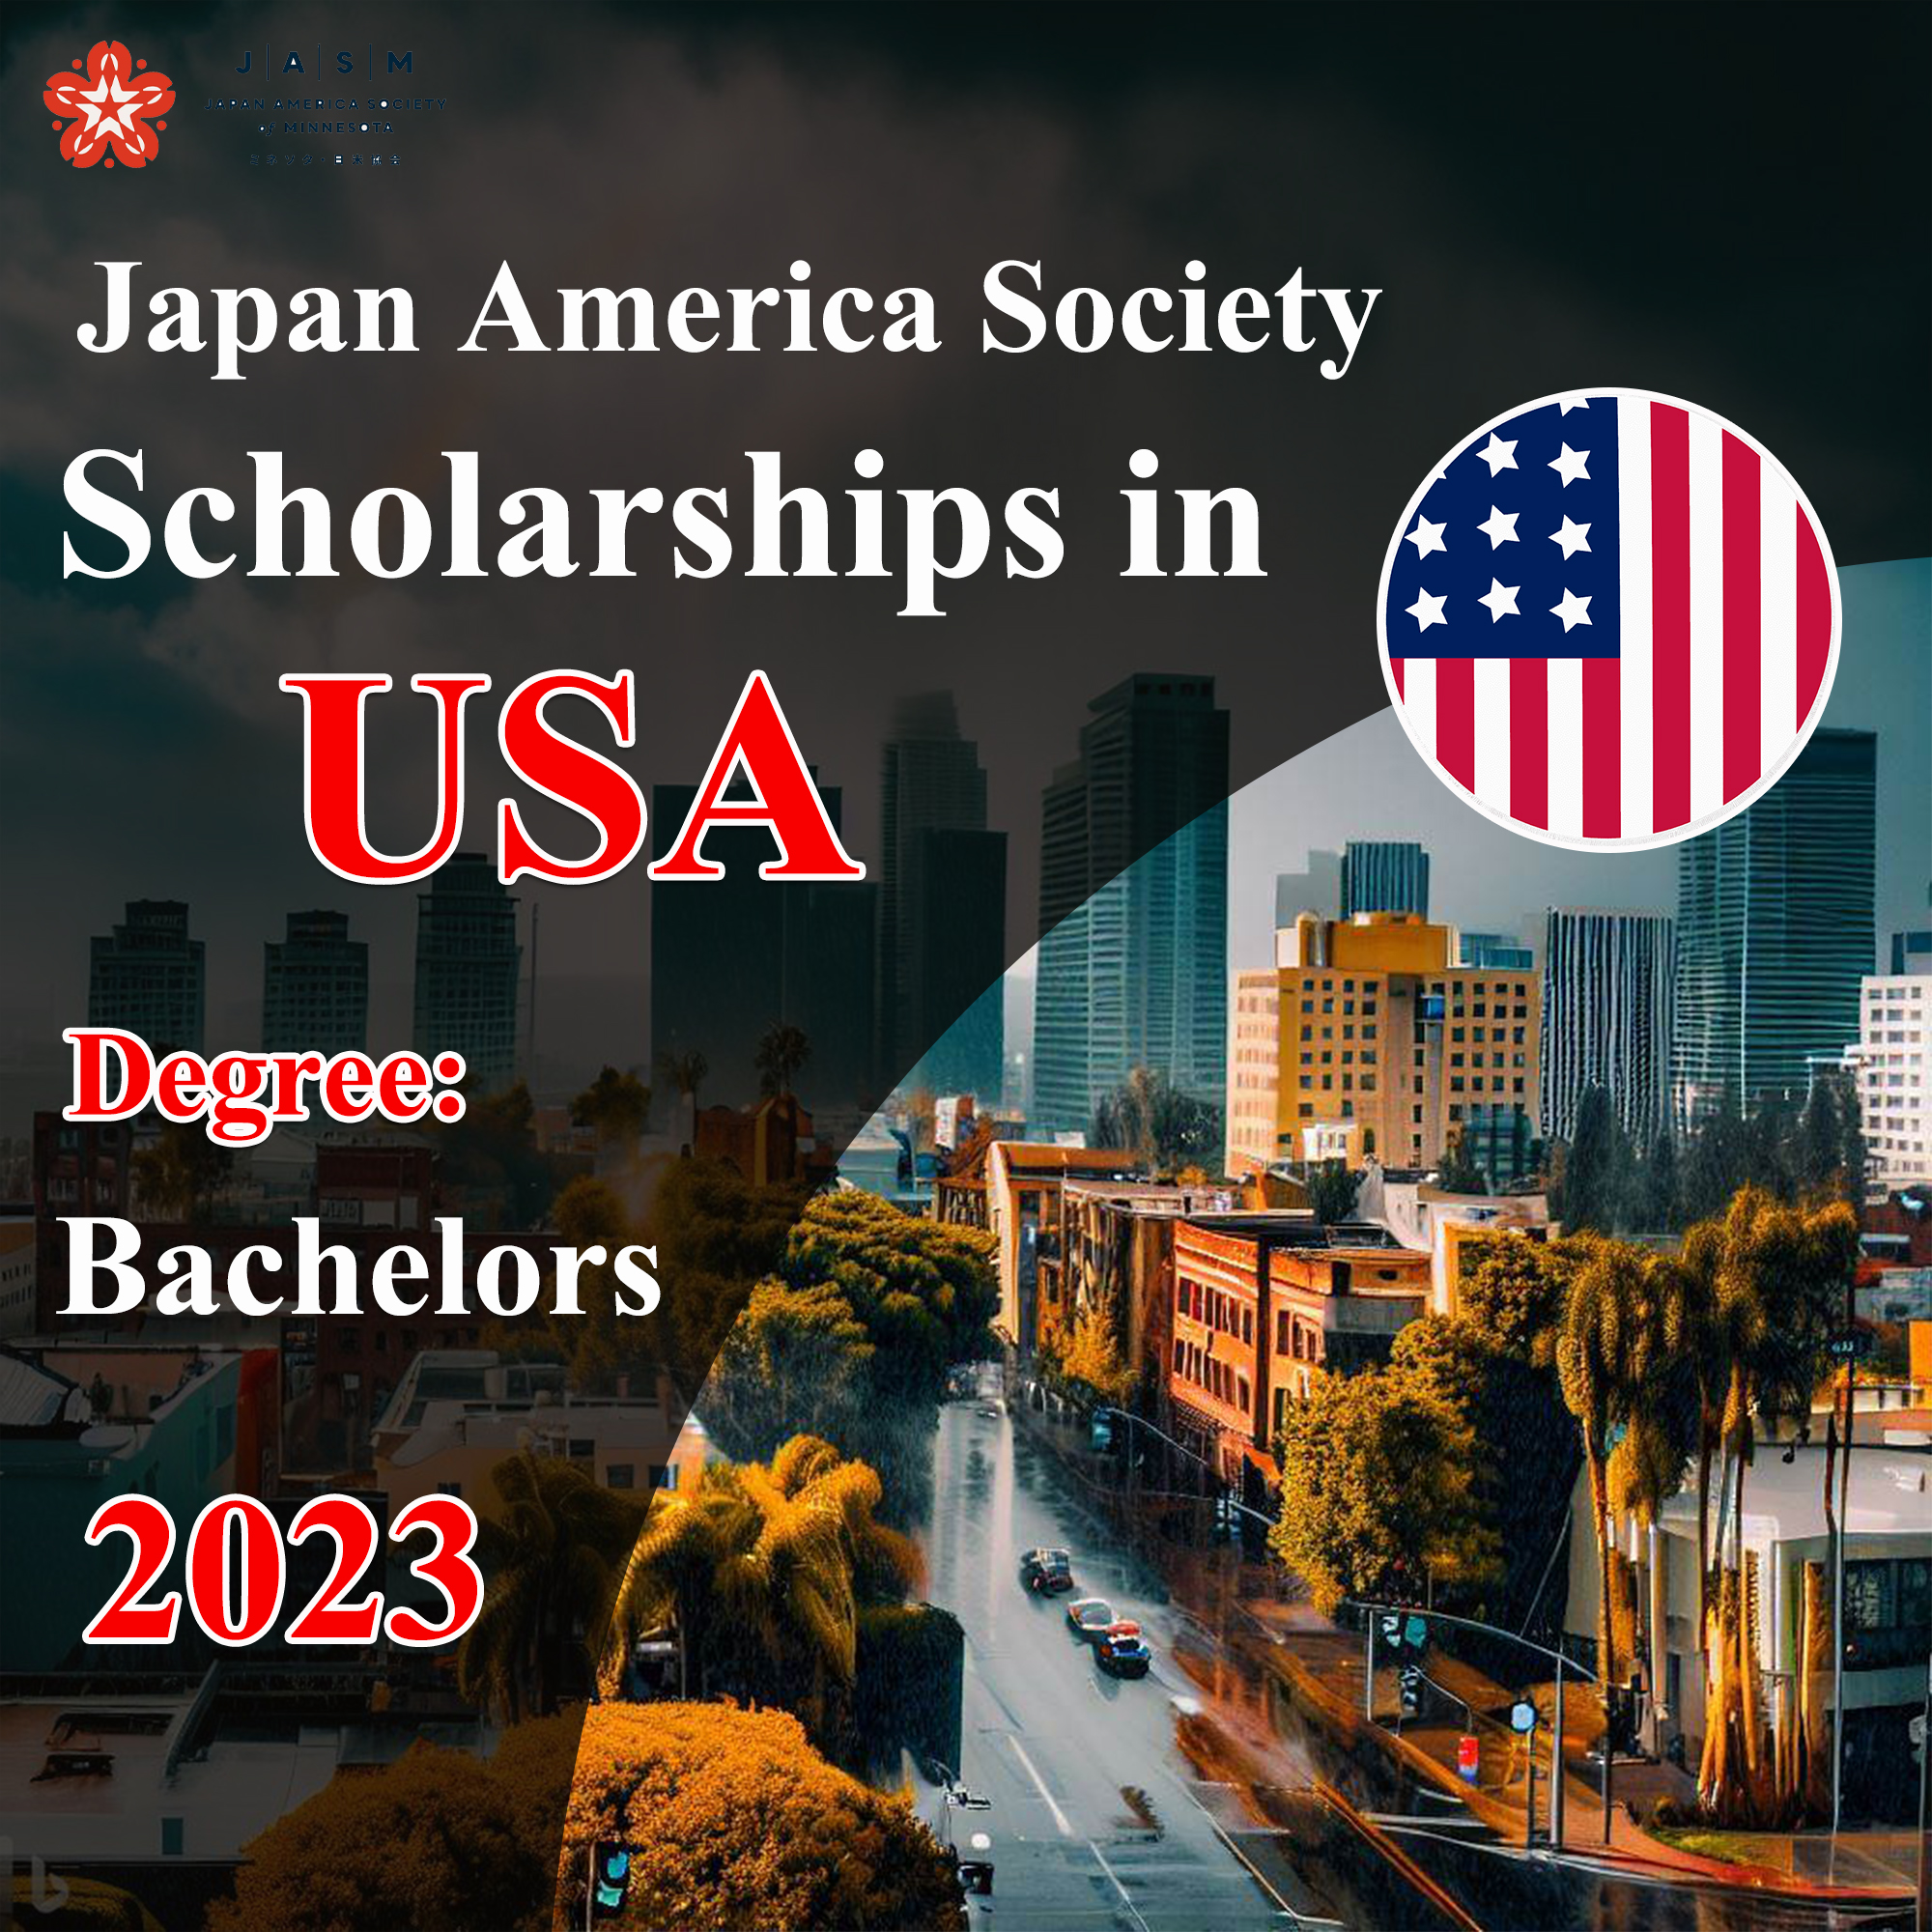 Japan America Society of Minnesota (JASM) Mondale Scholarship 2023